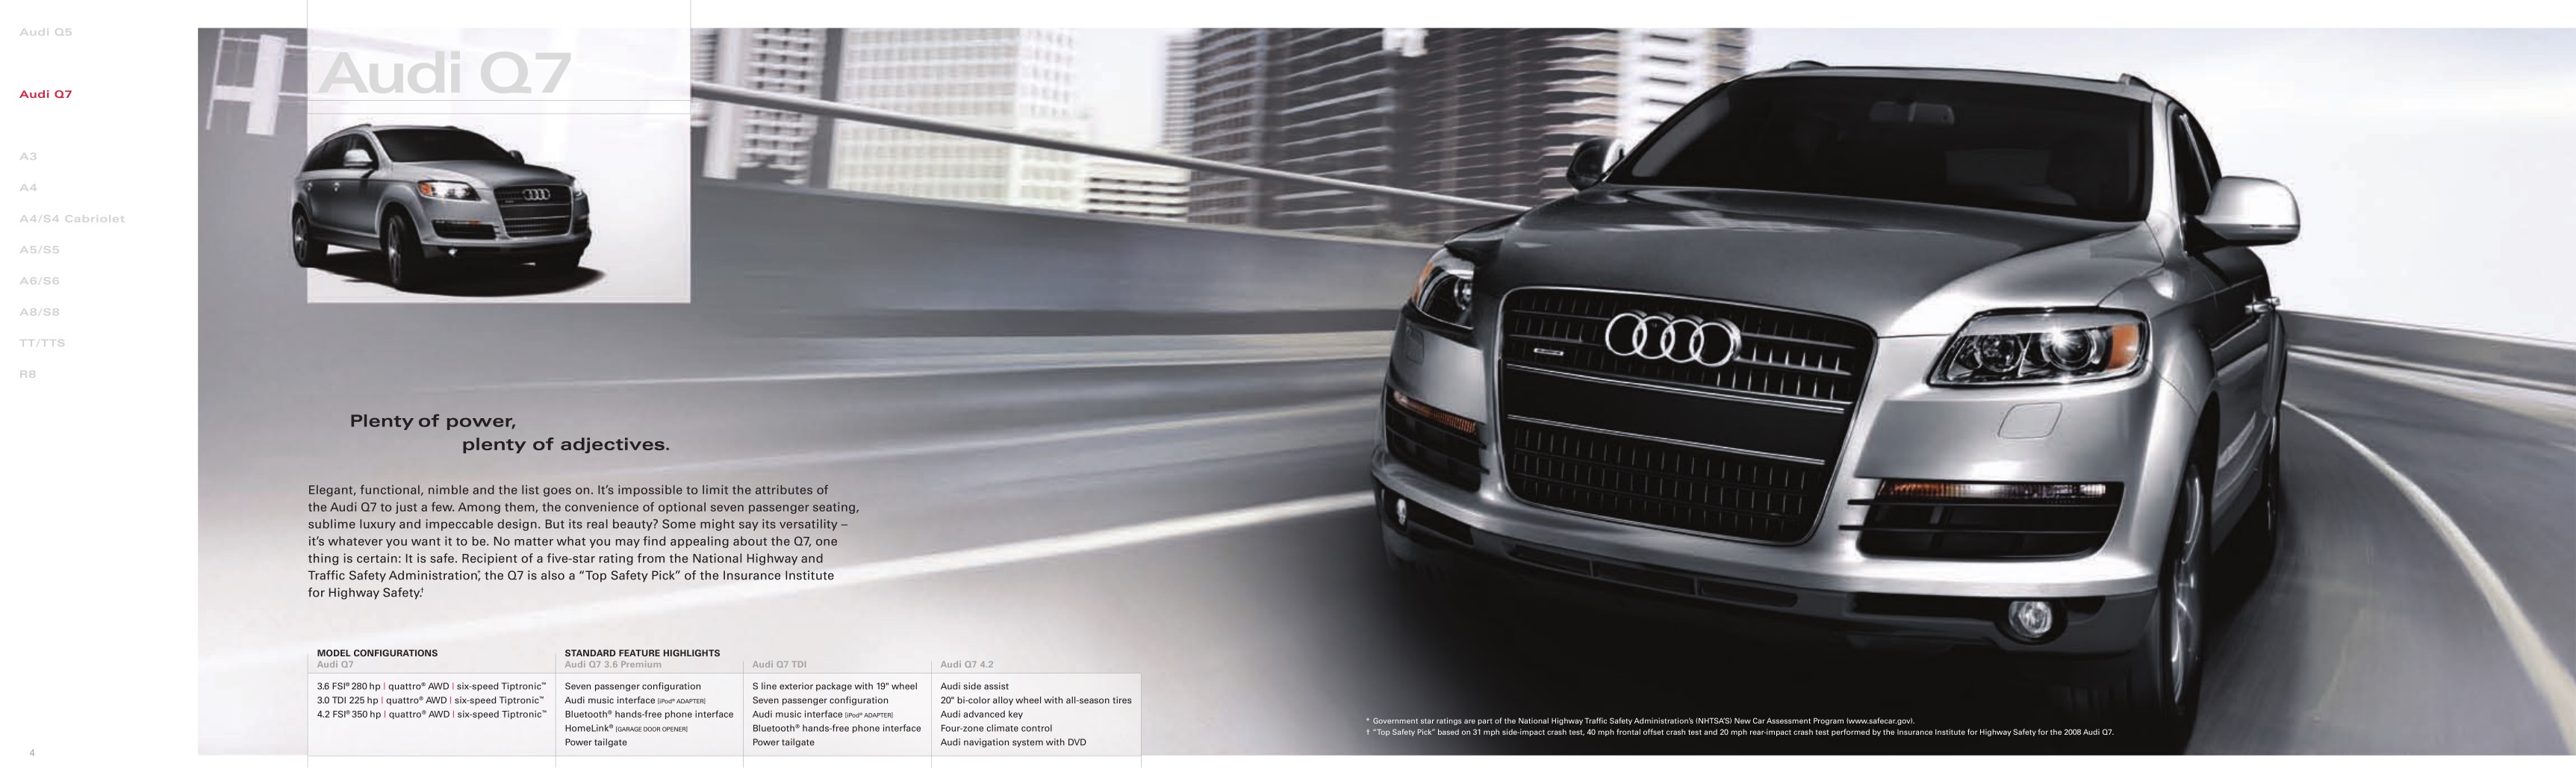 2009 Audi Brochure Page 1